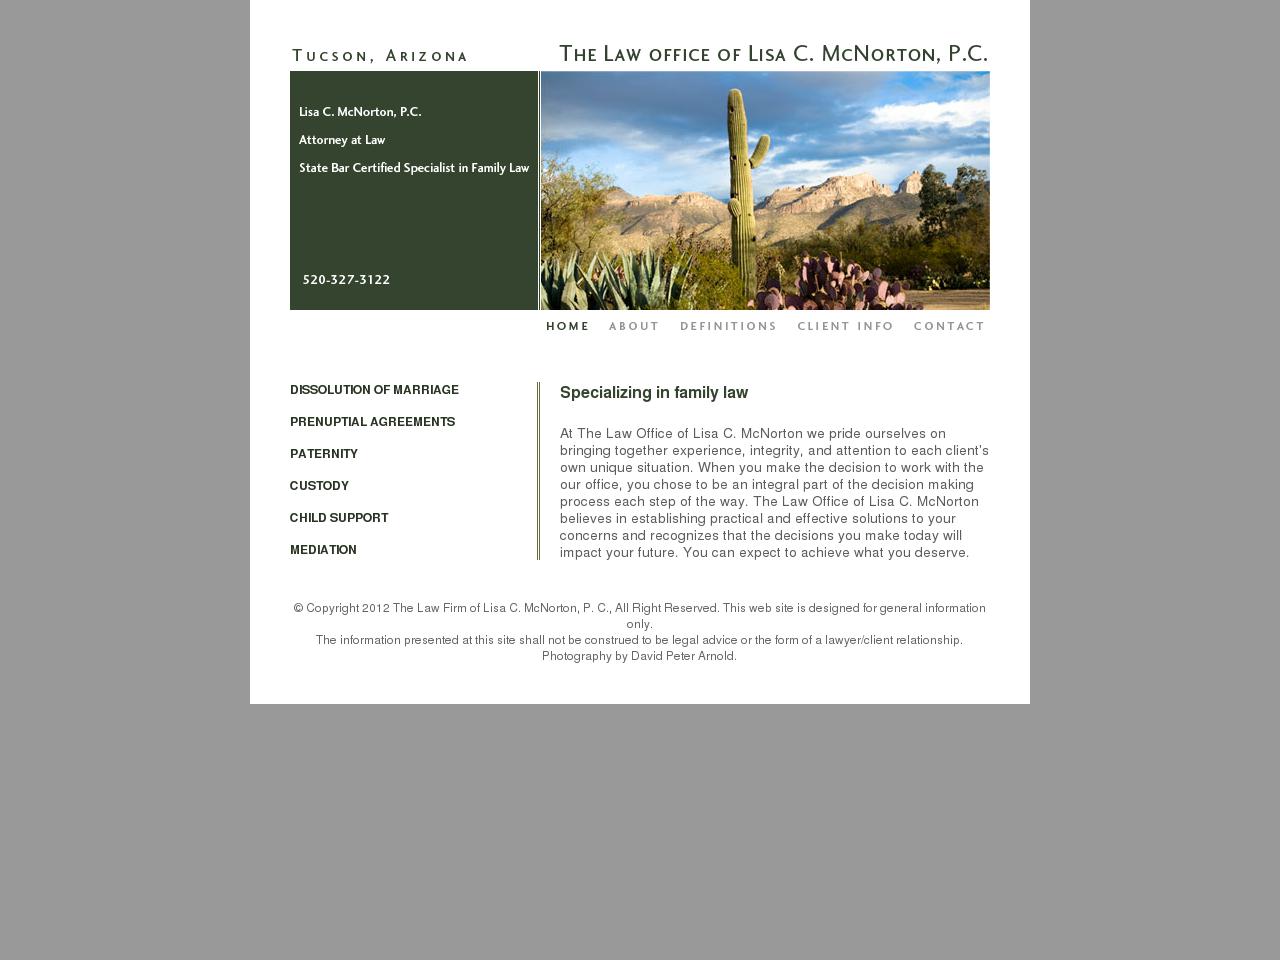 The Law Office of Lisa C. McNorton - Tucson AZ Lawyers